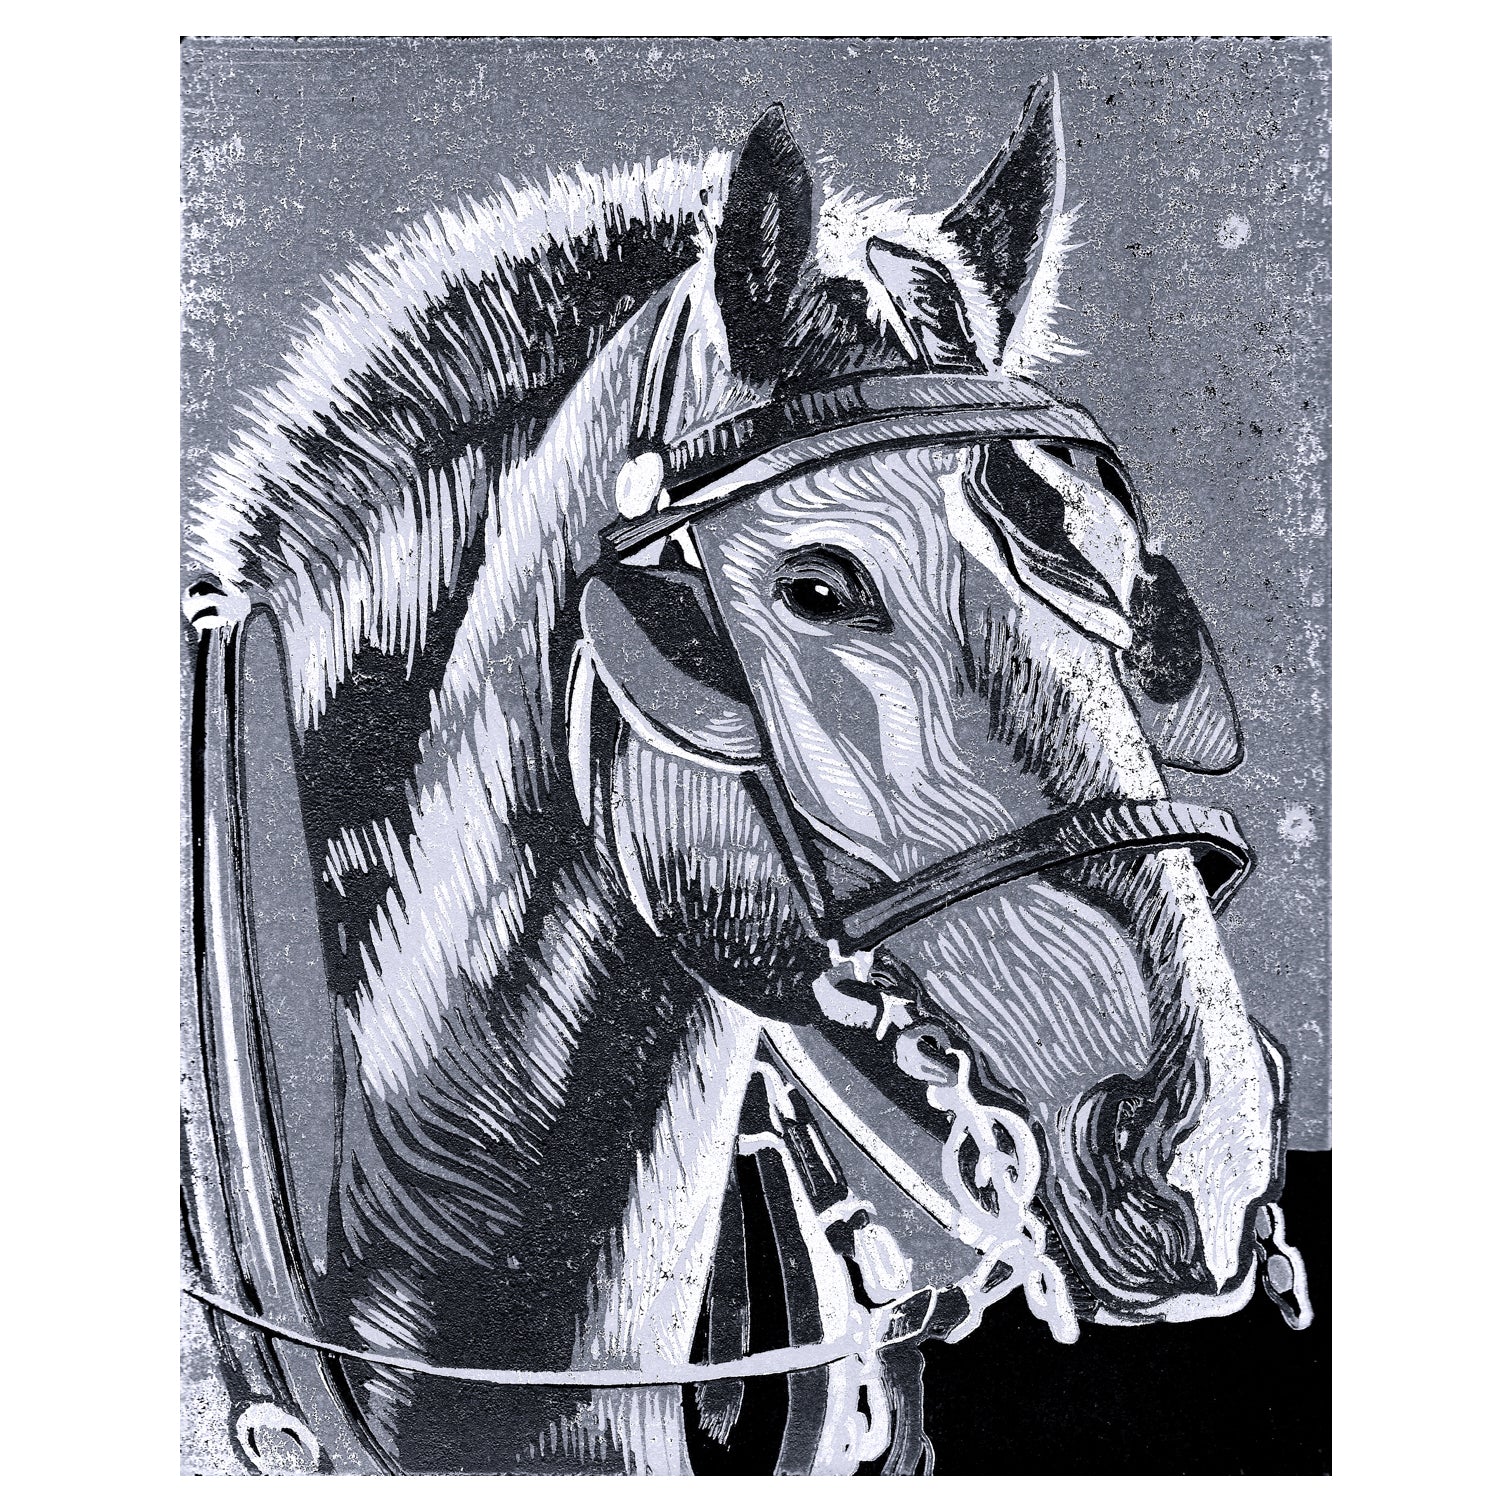 Mackinac Island horse art by printmaker Natalia Wohletz of Peninsula Prints titled Horse in Monochrome.